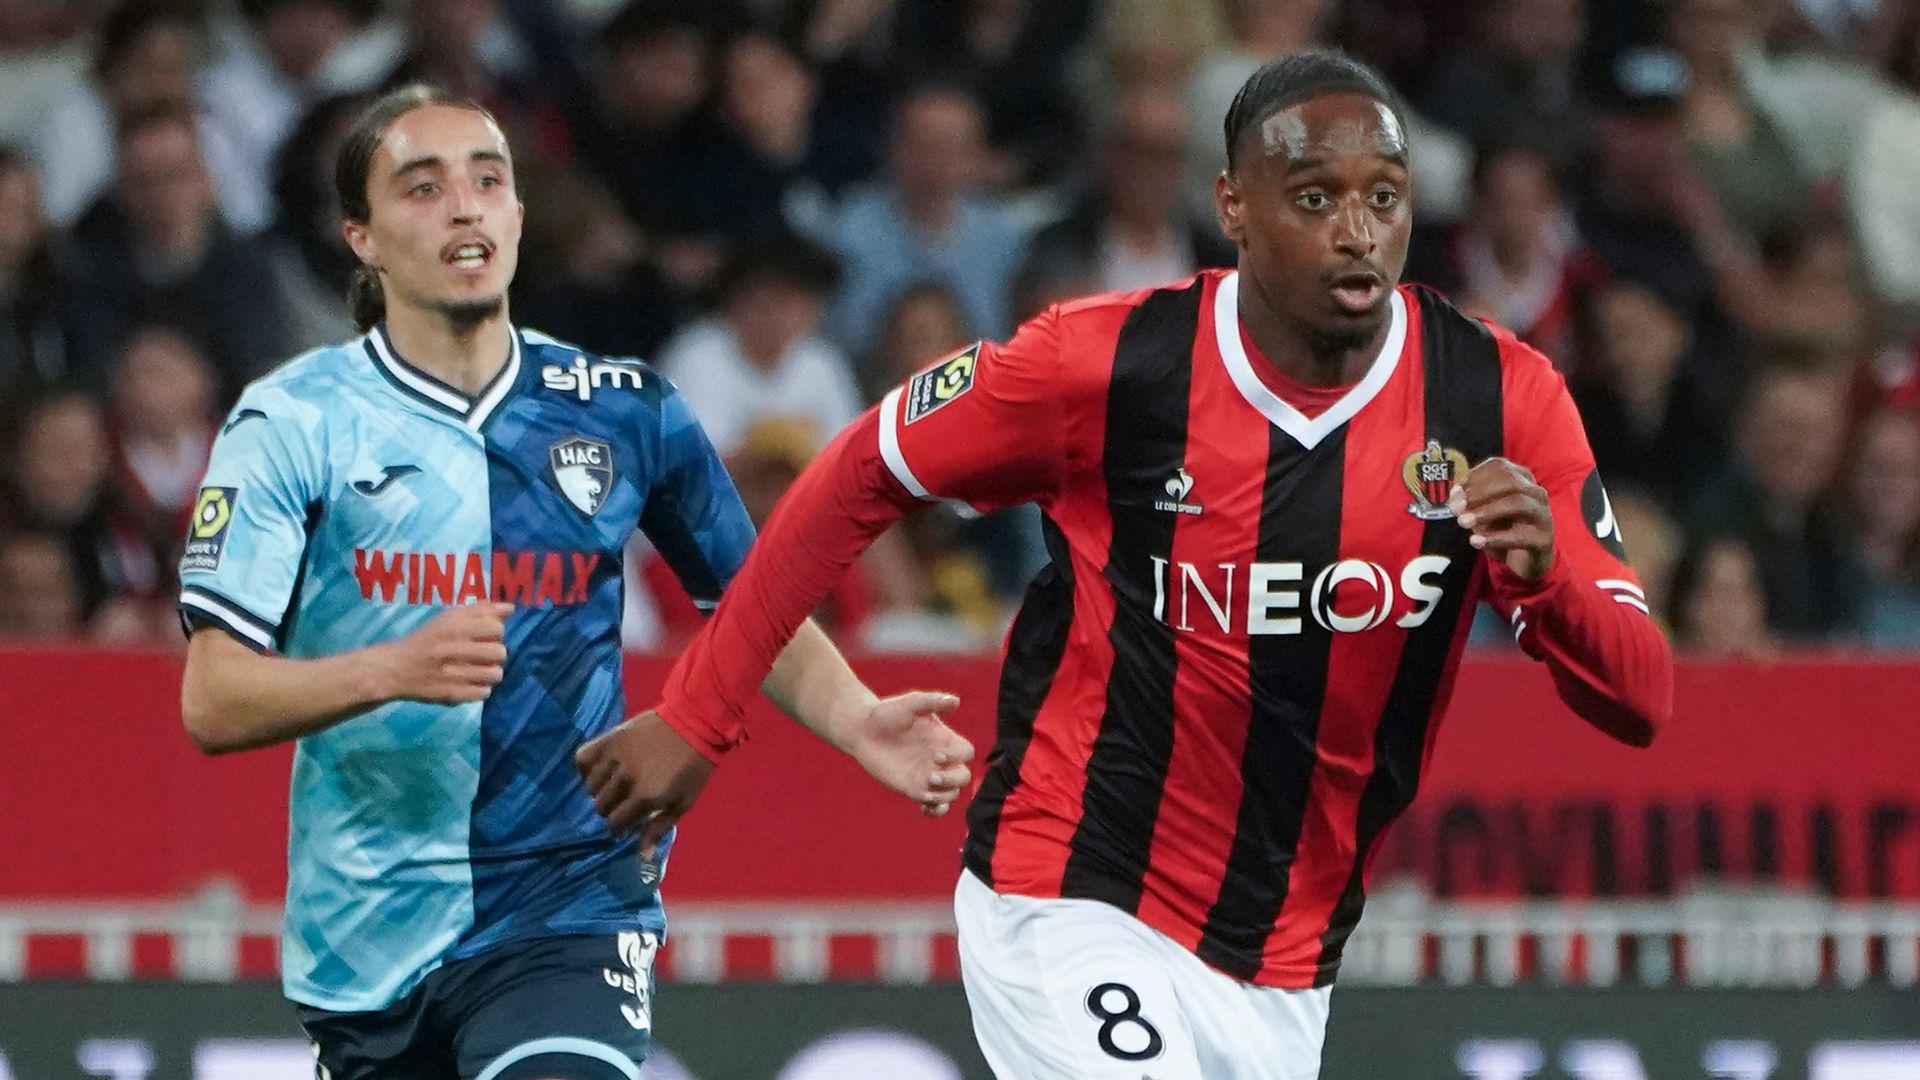 VIDEO | Ligue 1 Highlights: Nice vs Le Havre